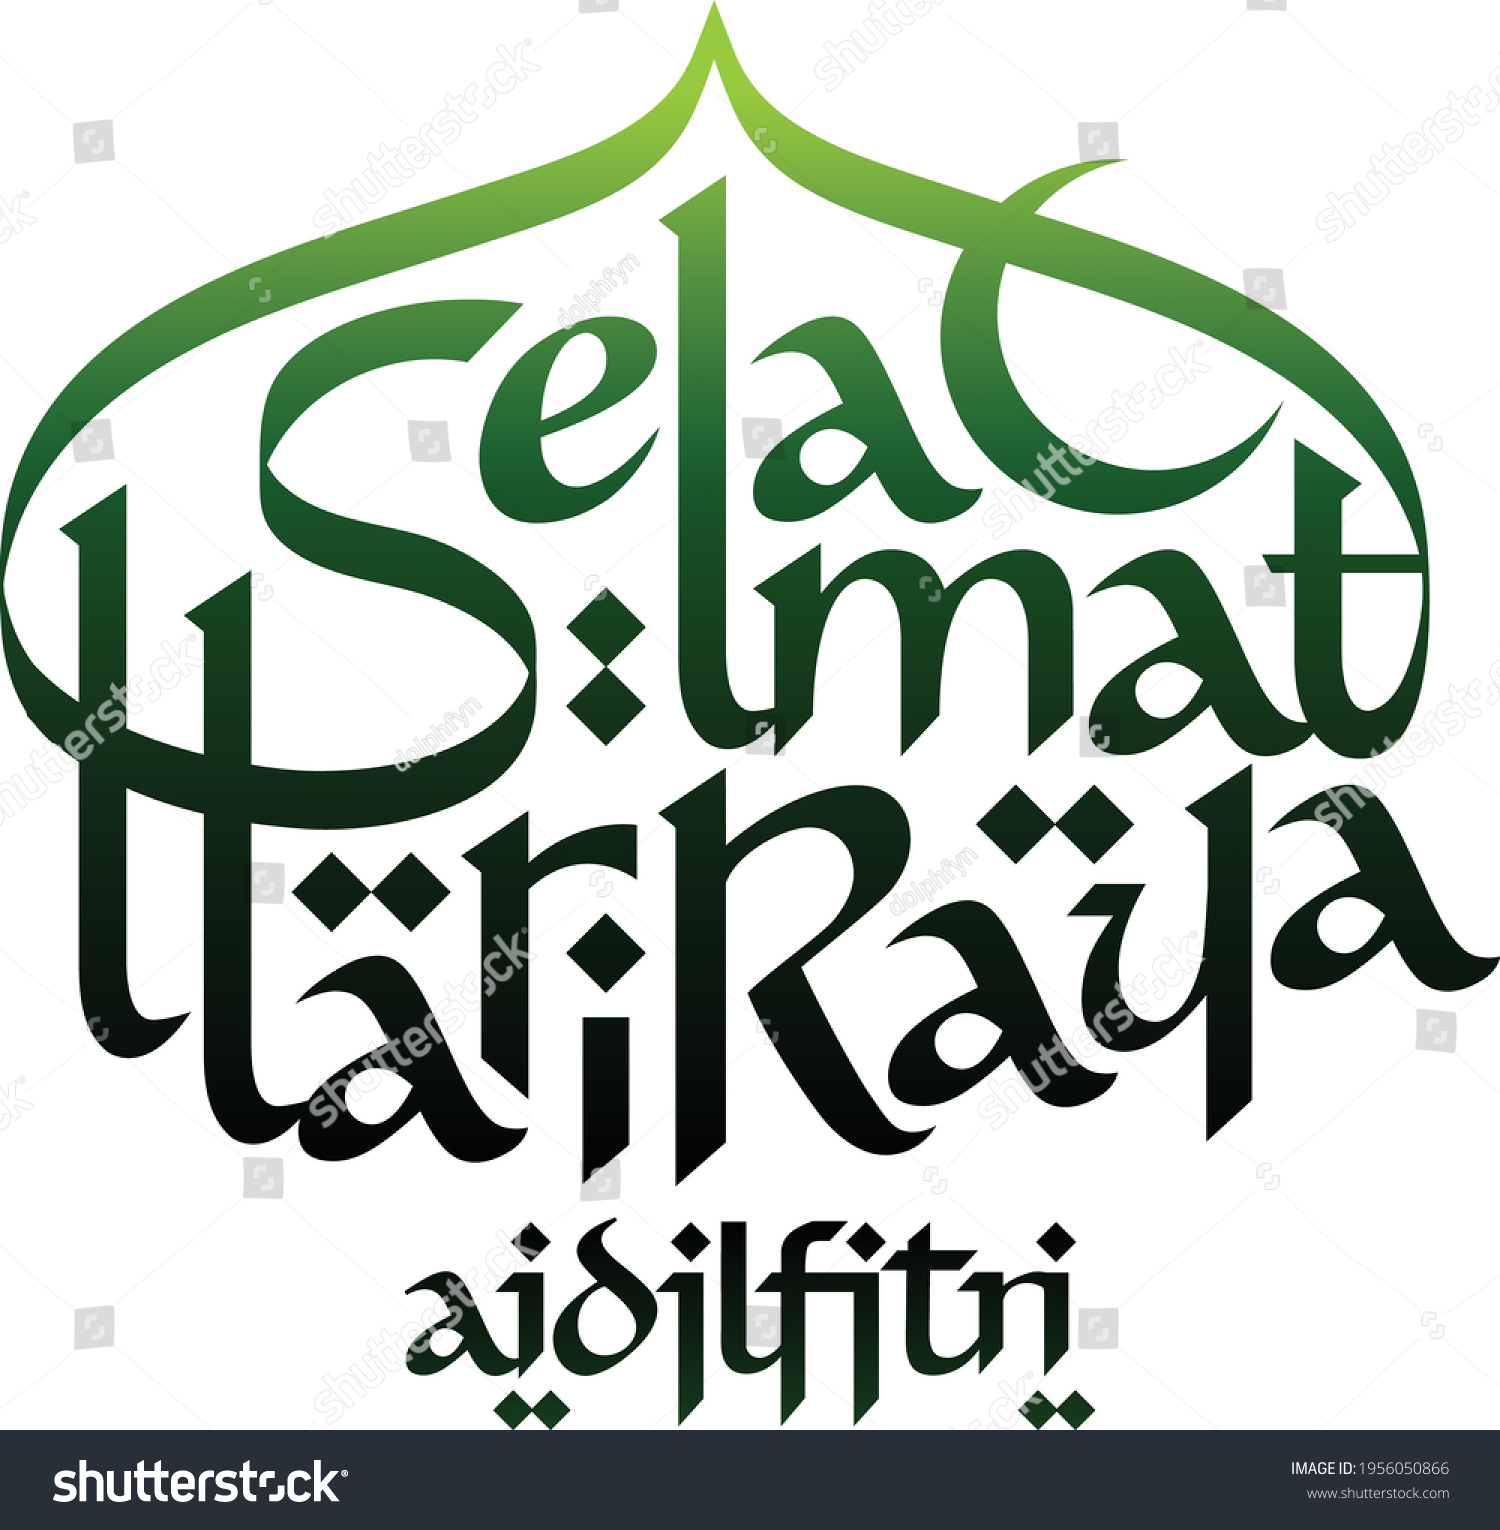 Hari Raya Aidilfitri Arabic Calligraphy Font Stock Vector Royalty Free 1956050866